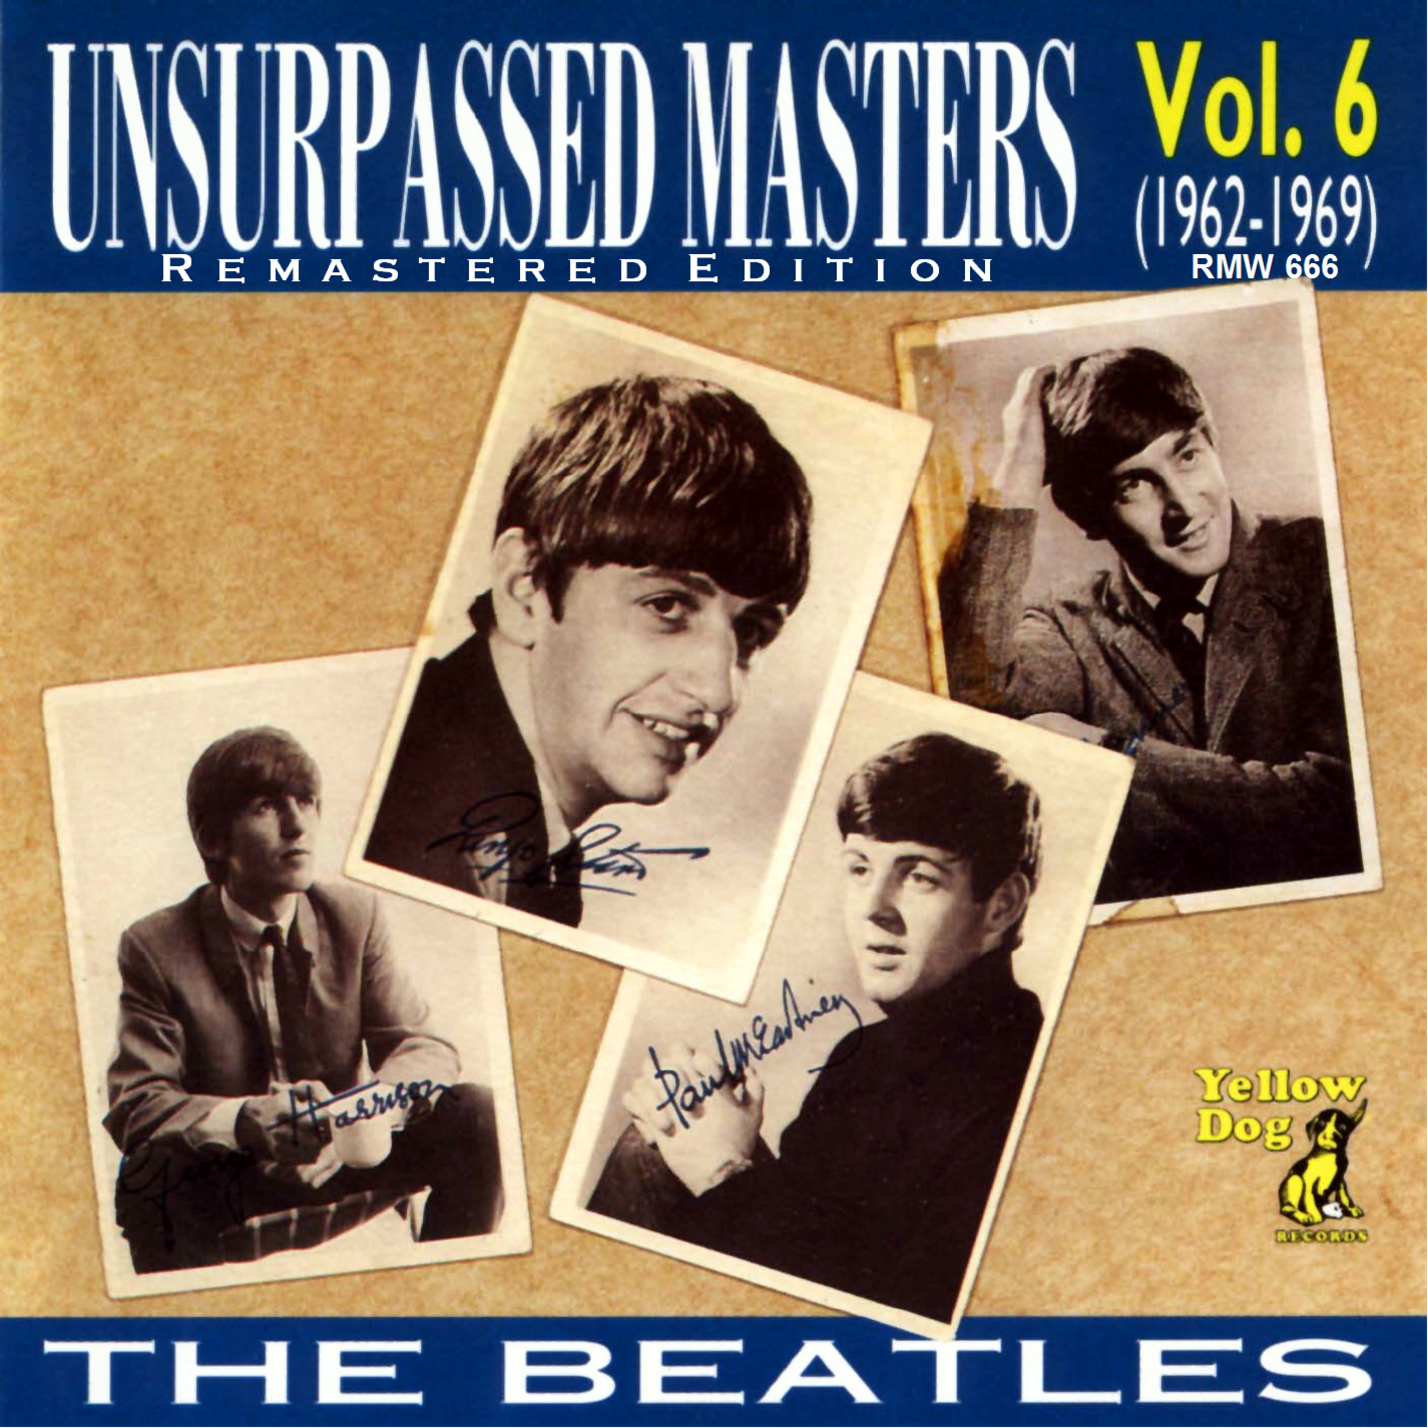 Beatles196xUnsurpassedMastersVol6 (2).png